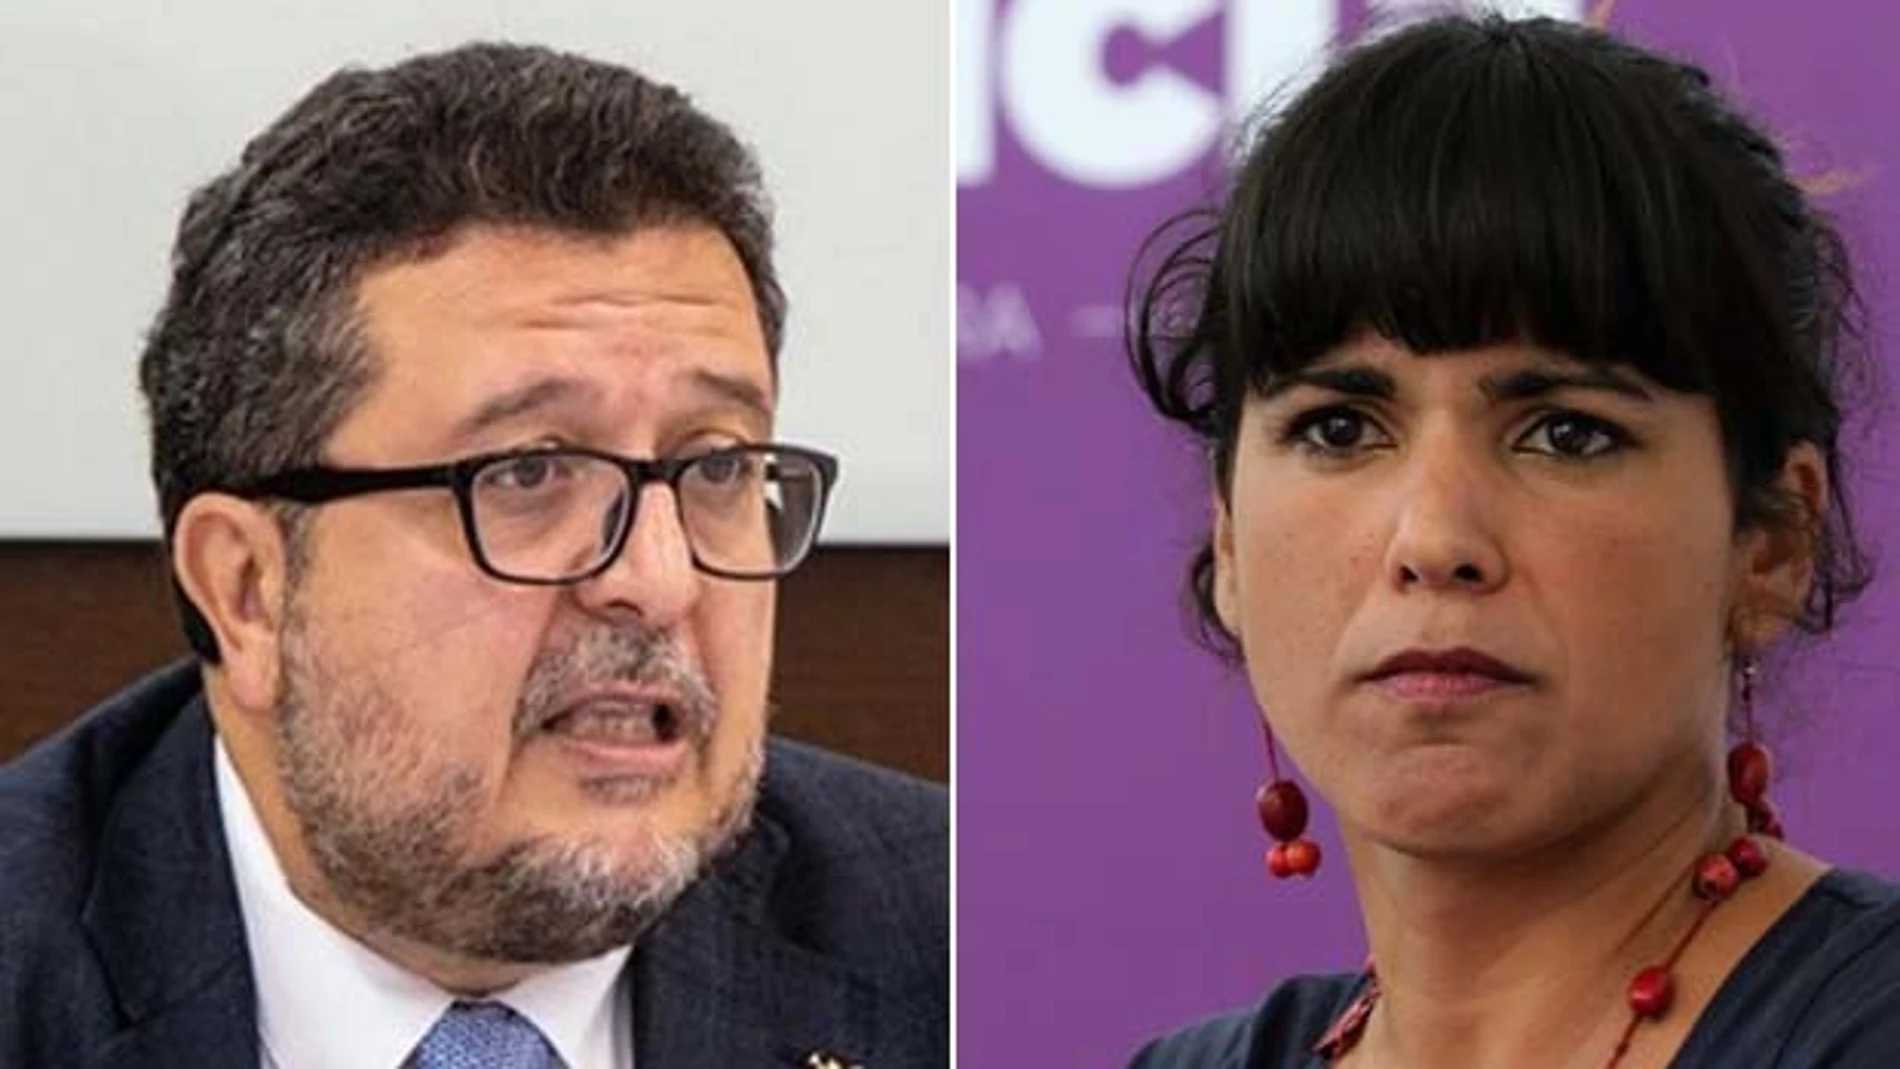 Francisco Serrano, líder de Vox en Andalucía, y Teresa Rodríguez, coordinadora de Podemos